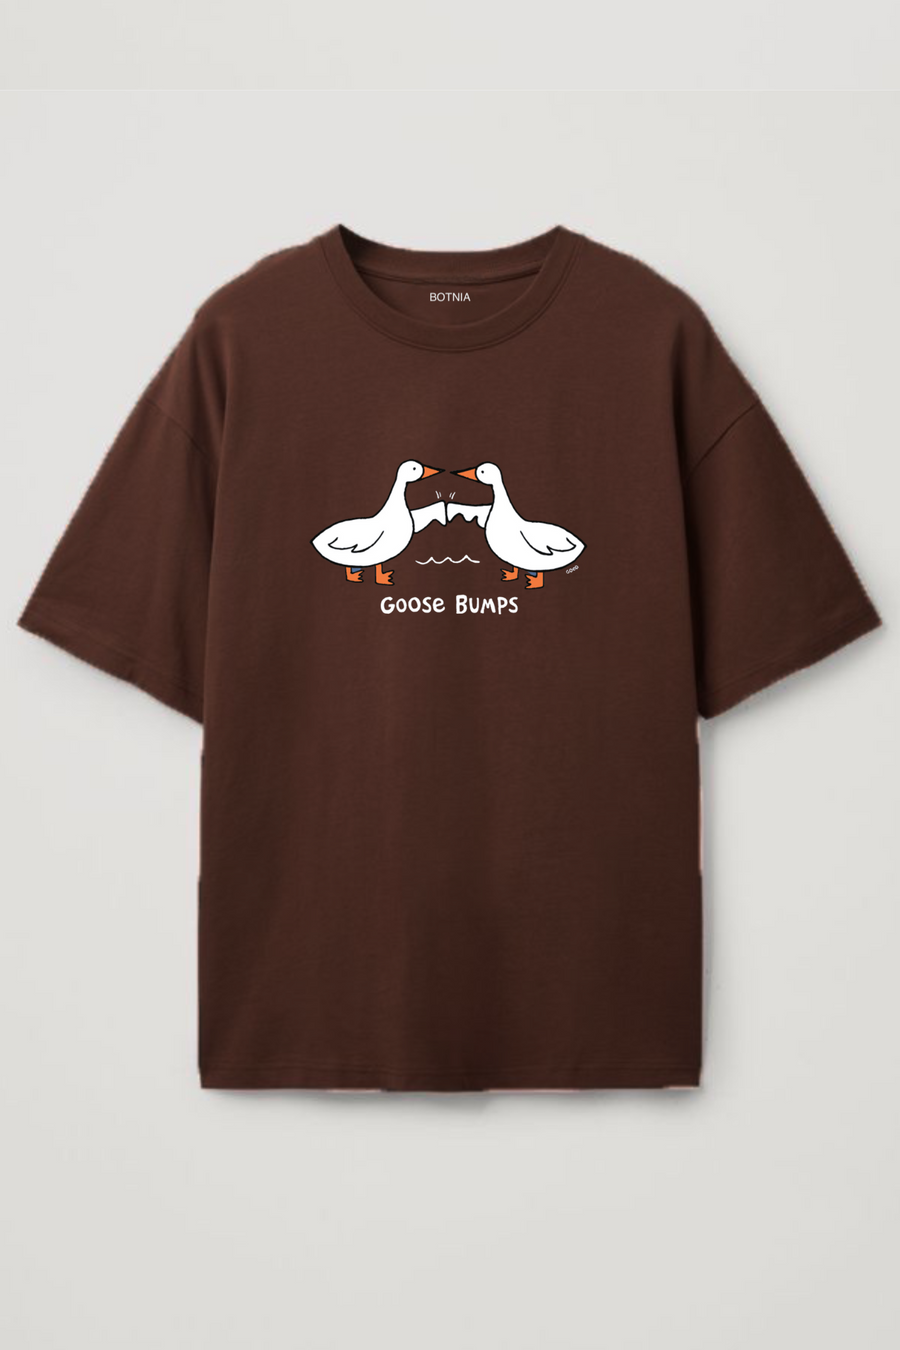 Goose Bumps- Oversized t-shirt